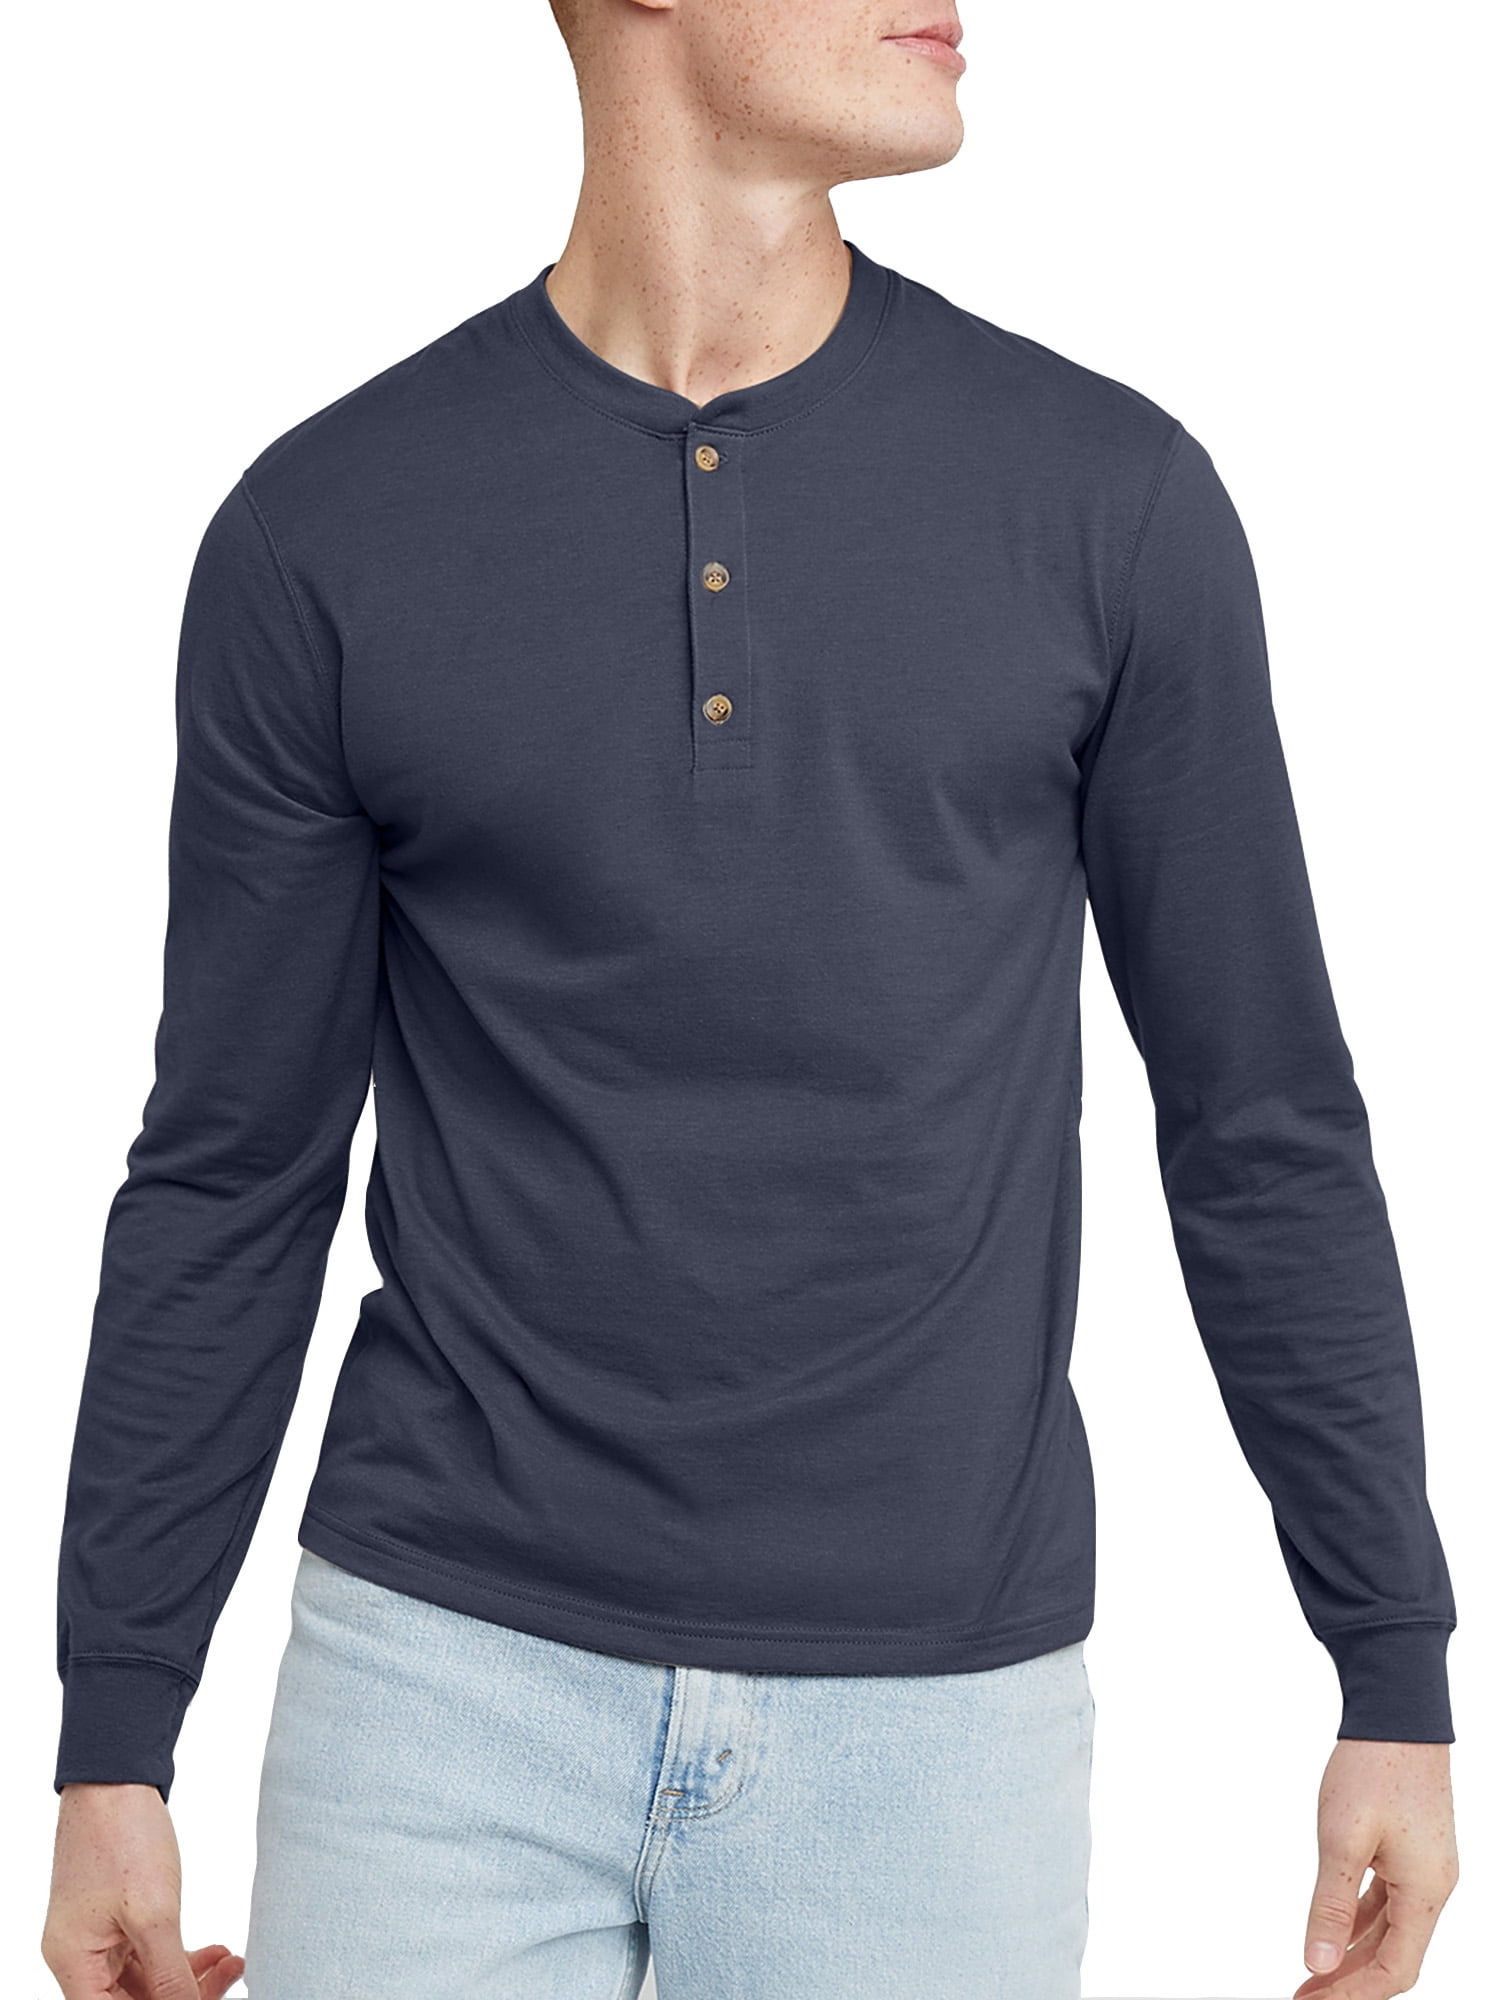 Hanes Originals Men's Cotton Long Sleeve Henley T-Shirt White M